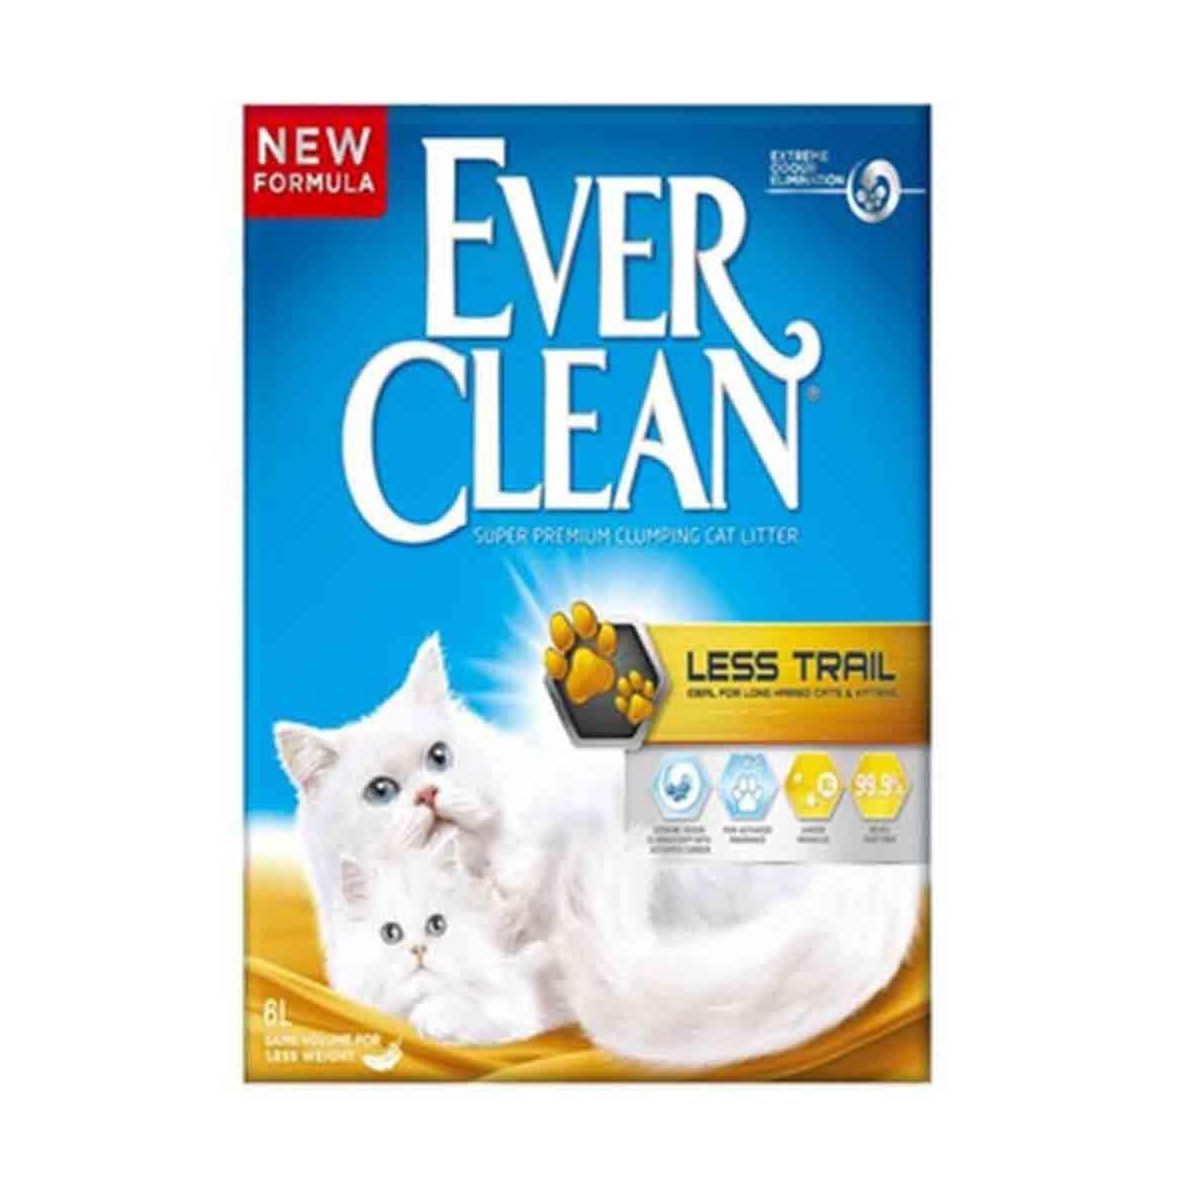 ever clean kedi kumu fiyatlari